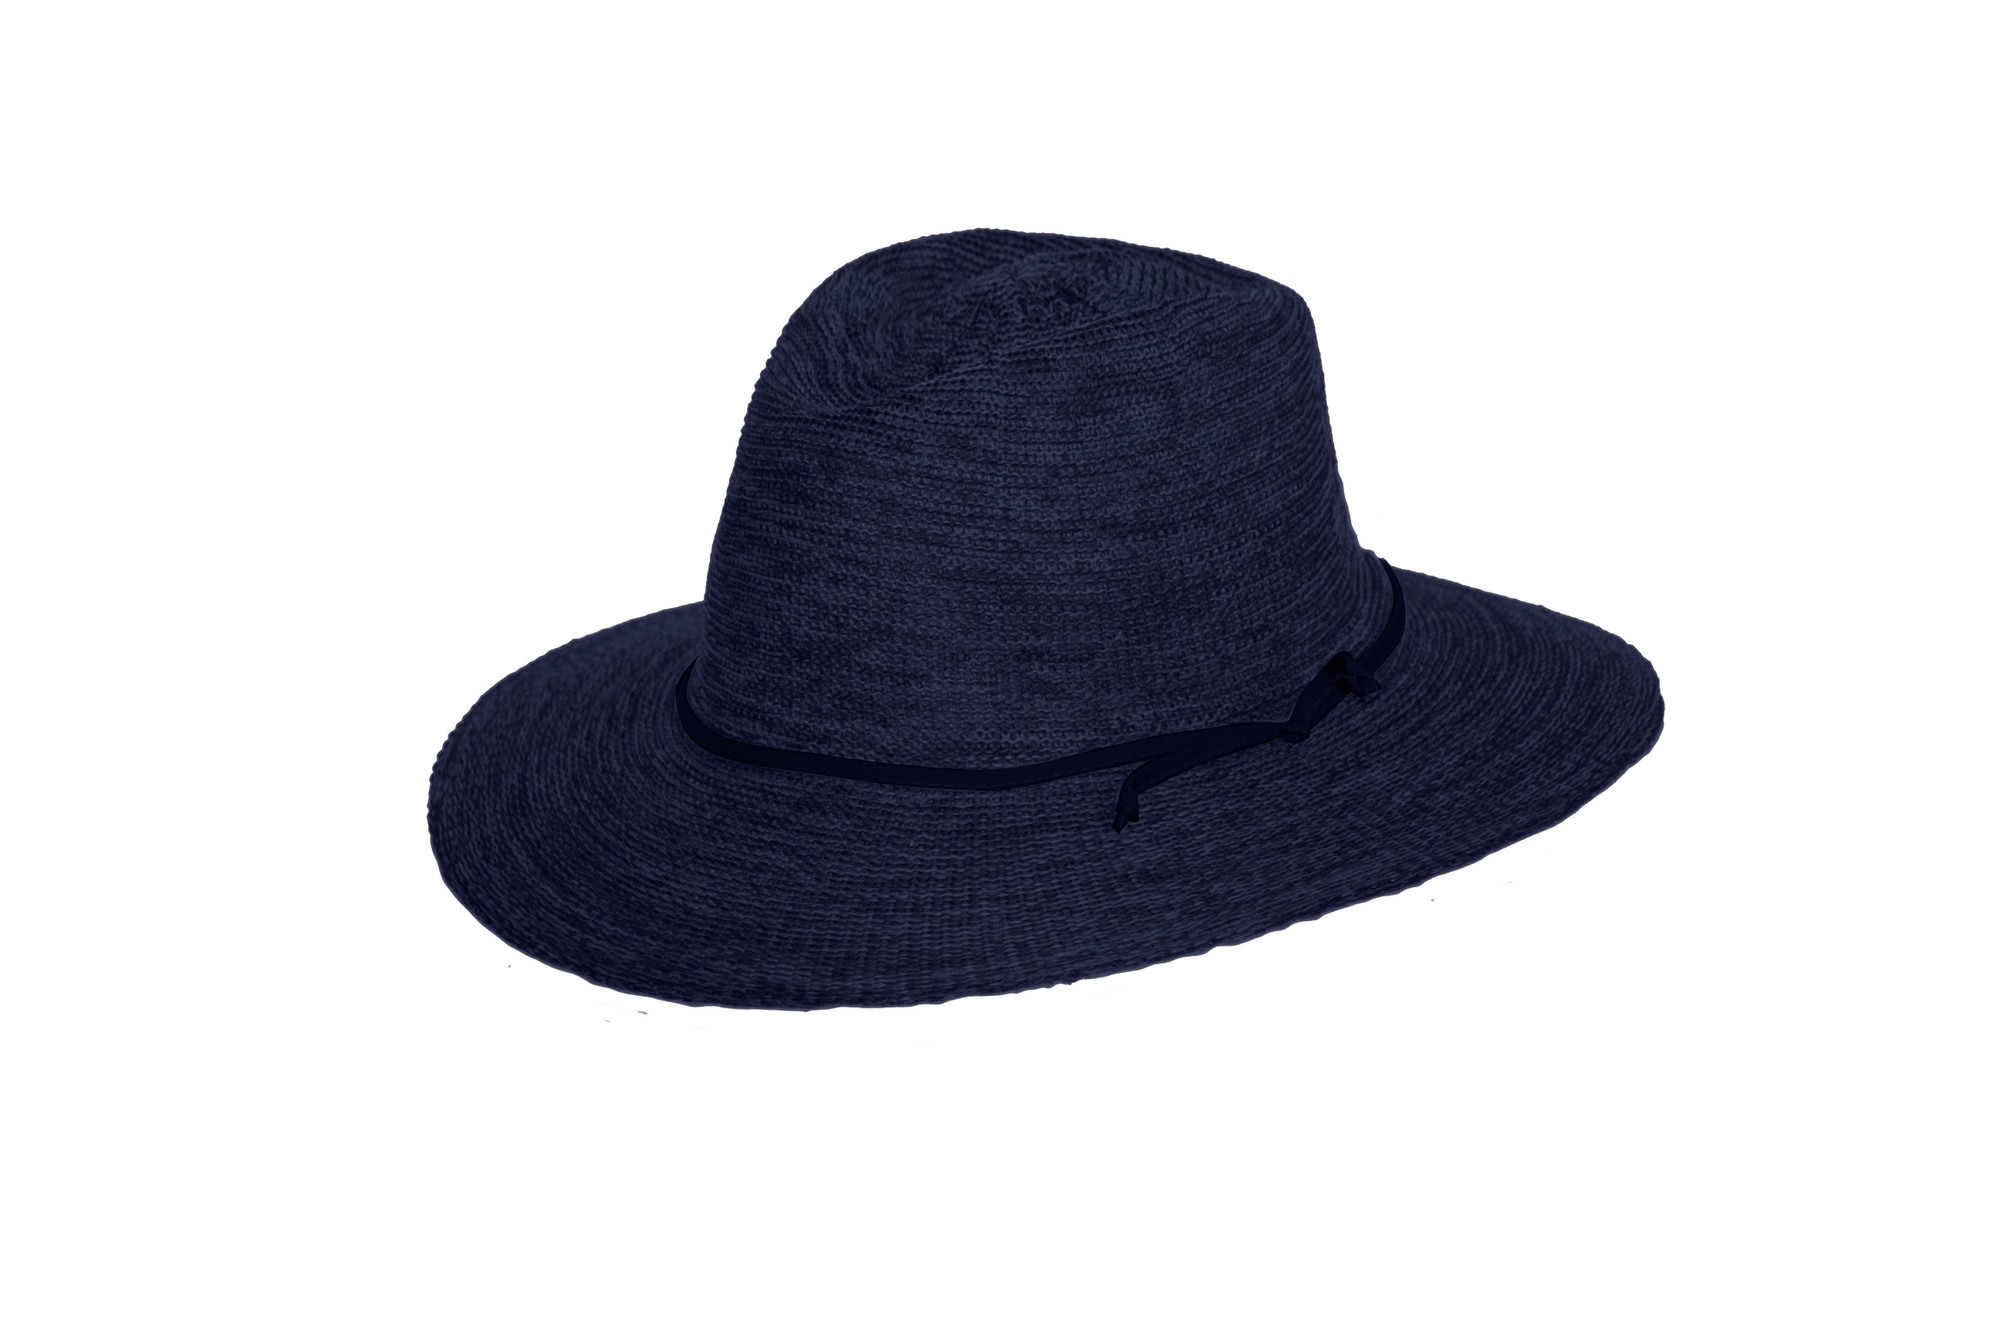 Rigon - UV fedora hat for women - Jacqui - Mixed navy blue